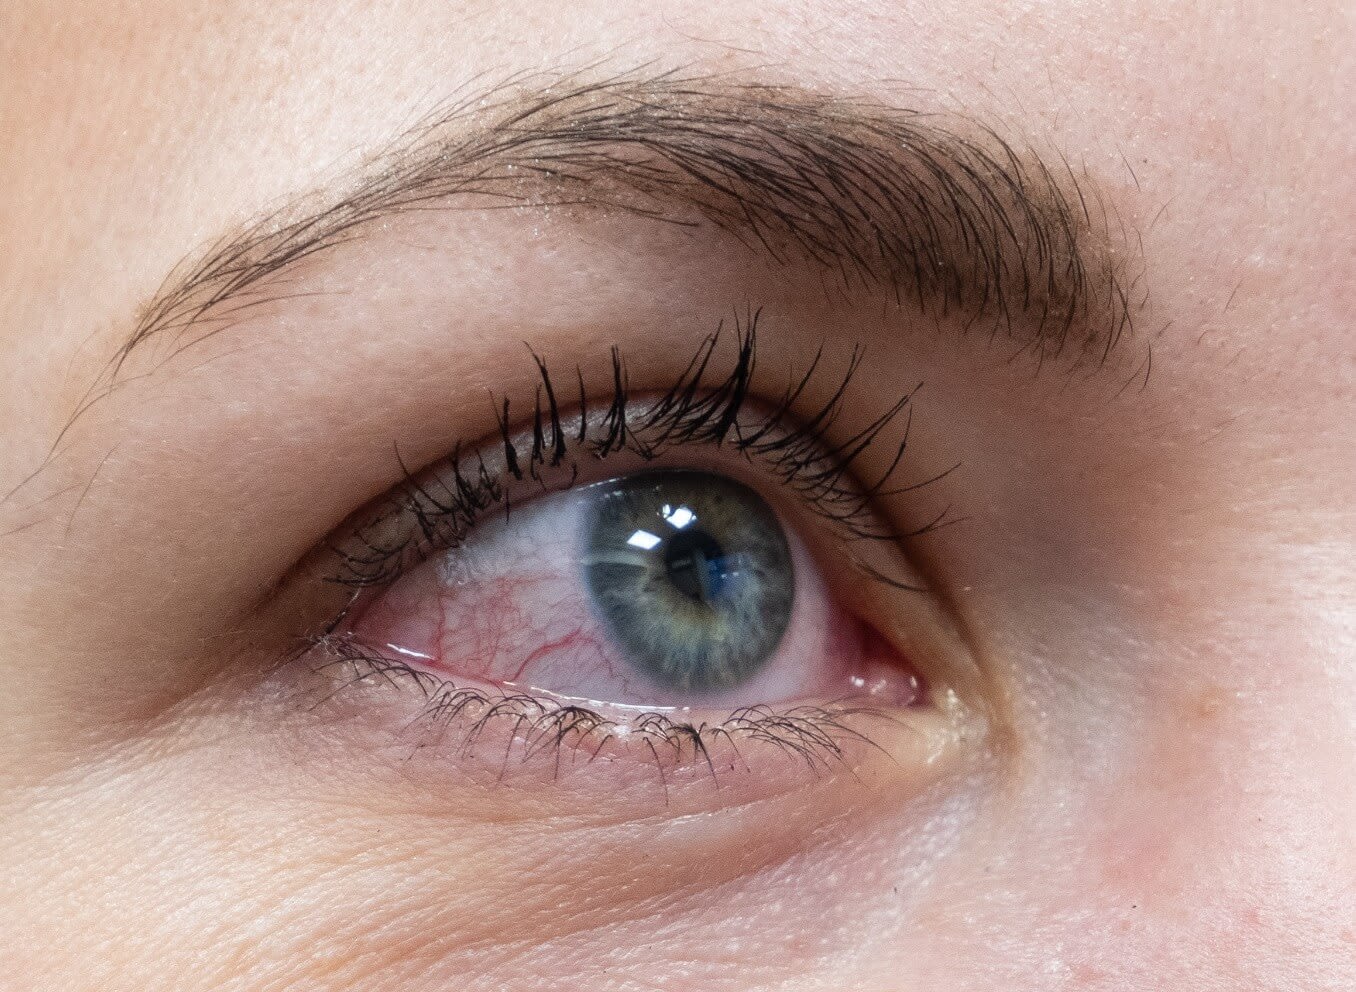 Pink eye irritation from chlorine